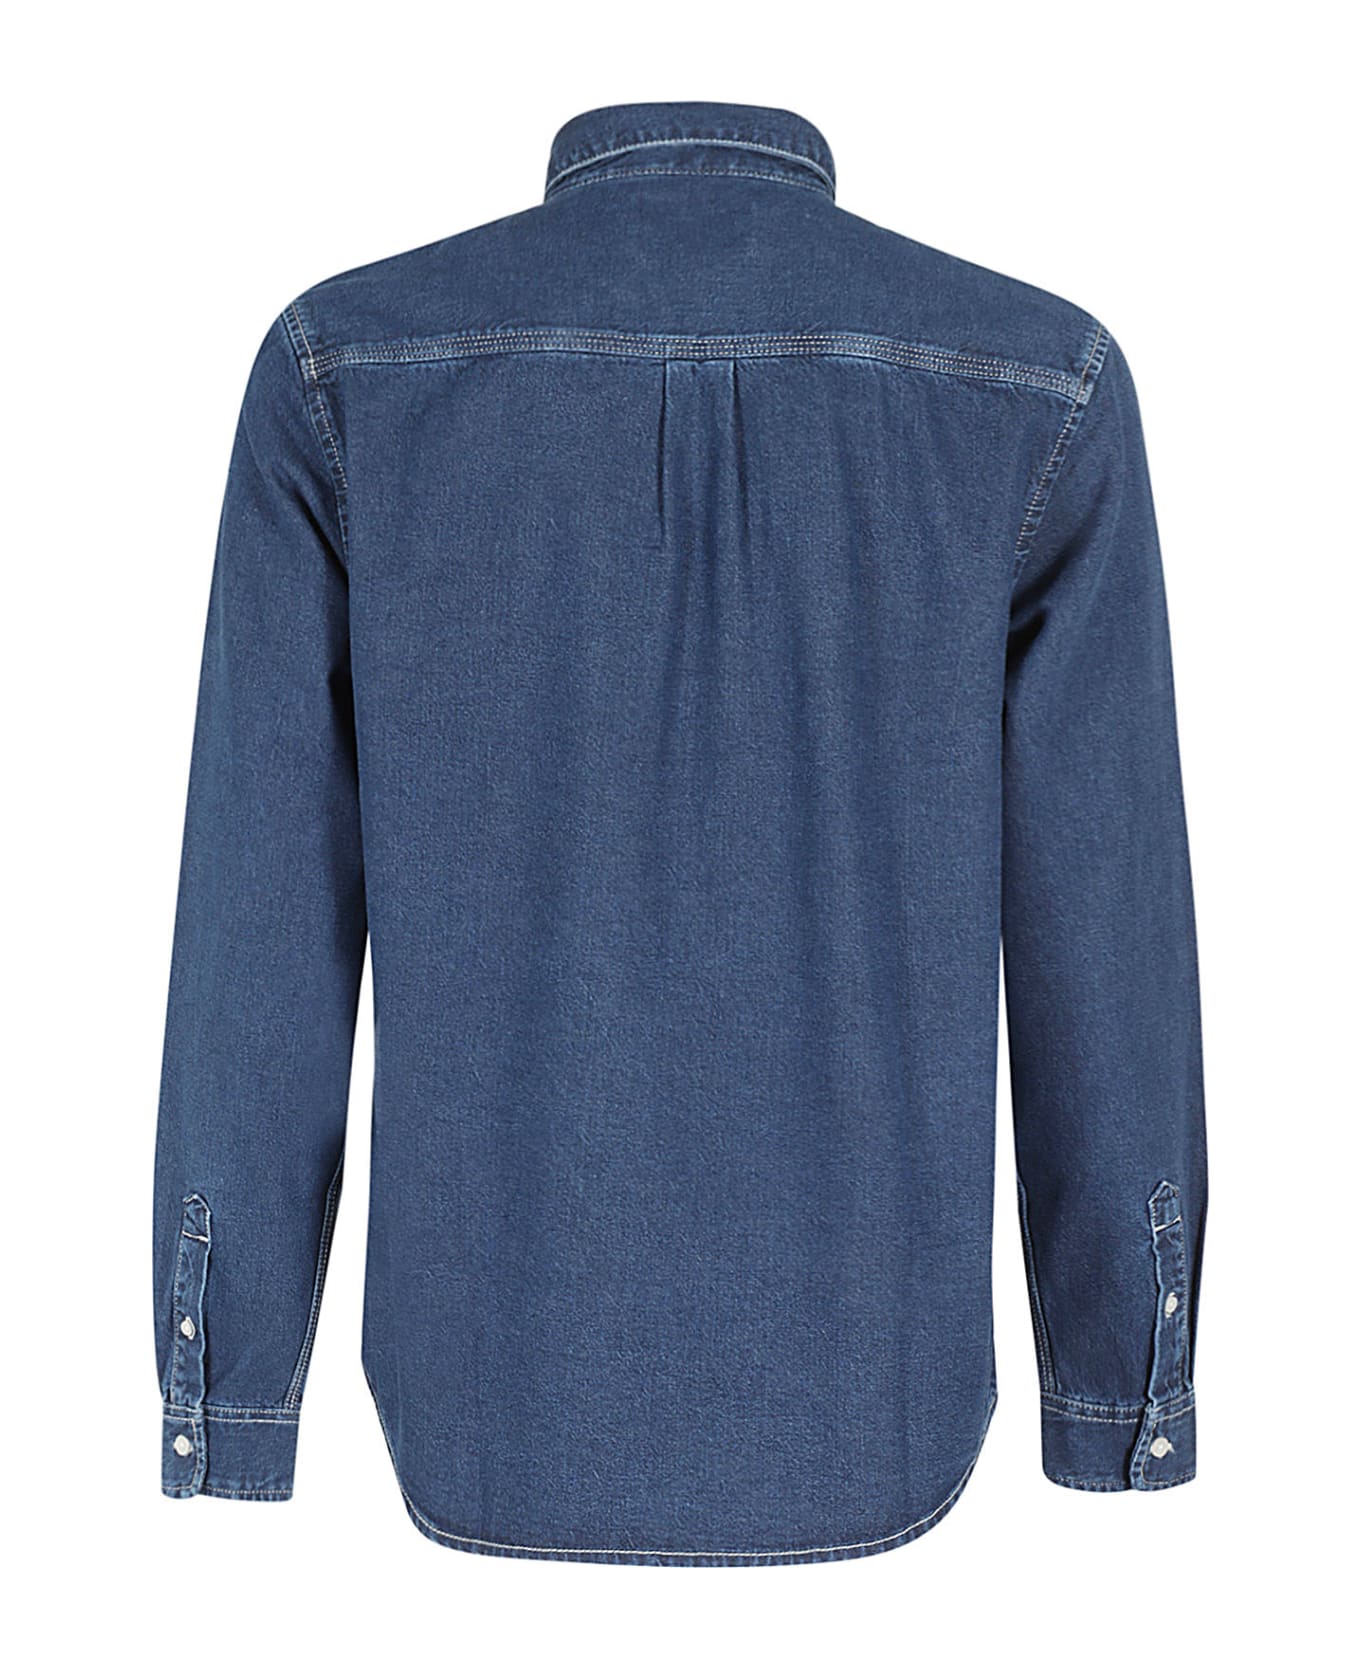 Carhartt 'l/s Weldon' Shirt - Blue Stone Washed